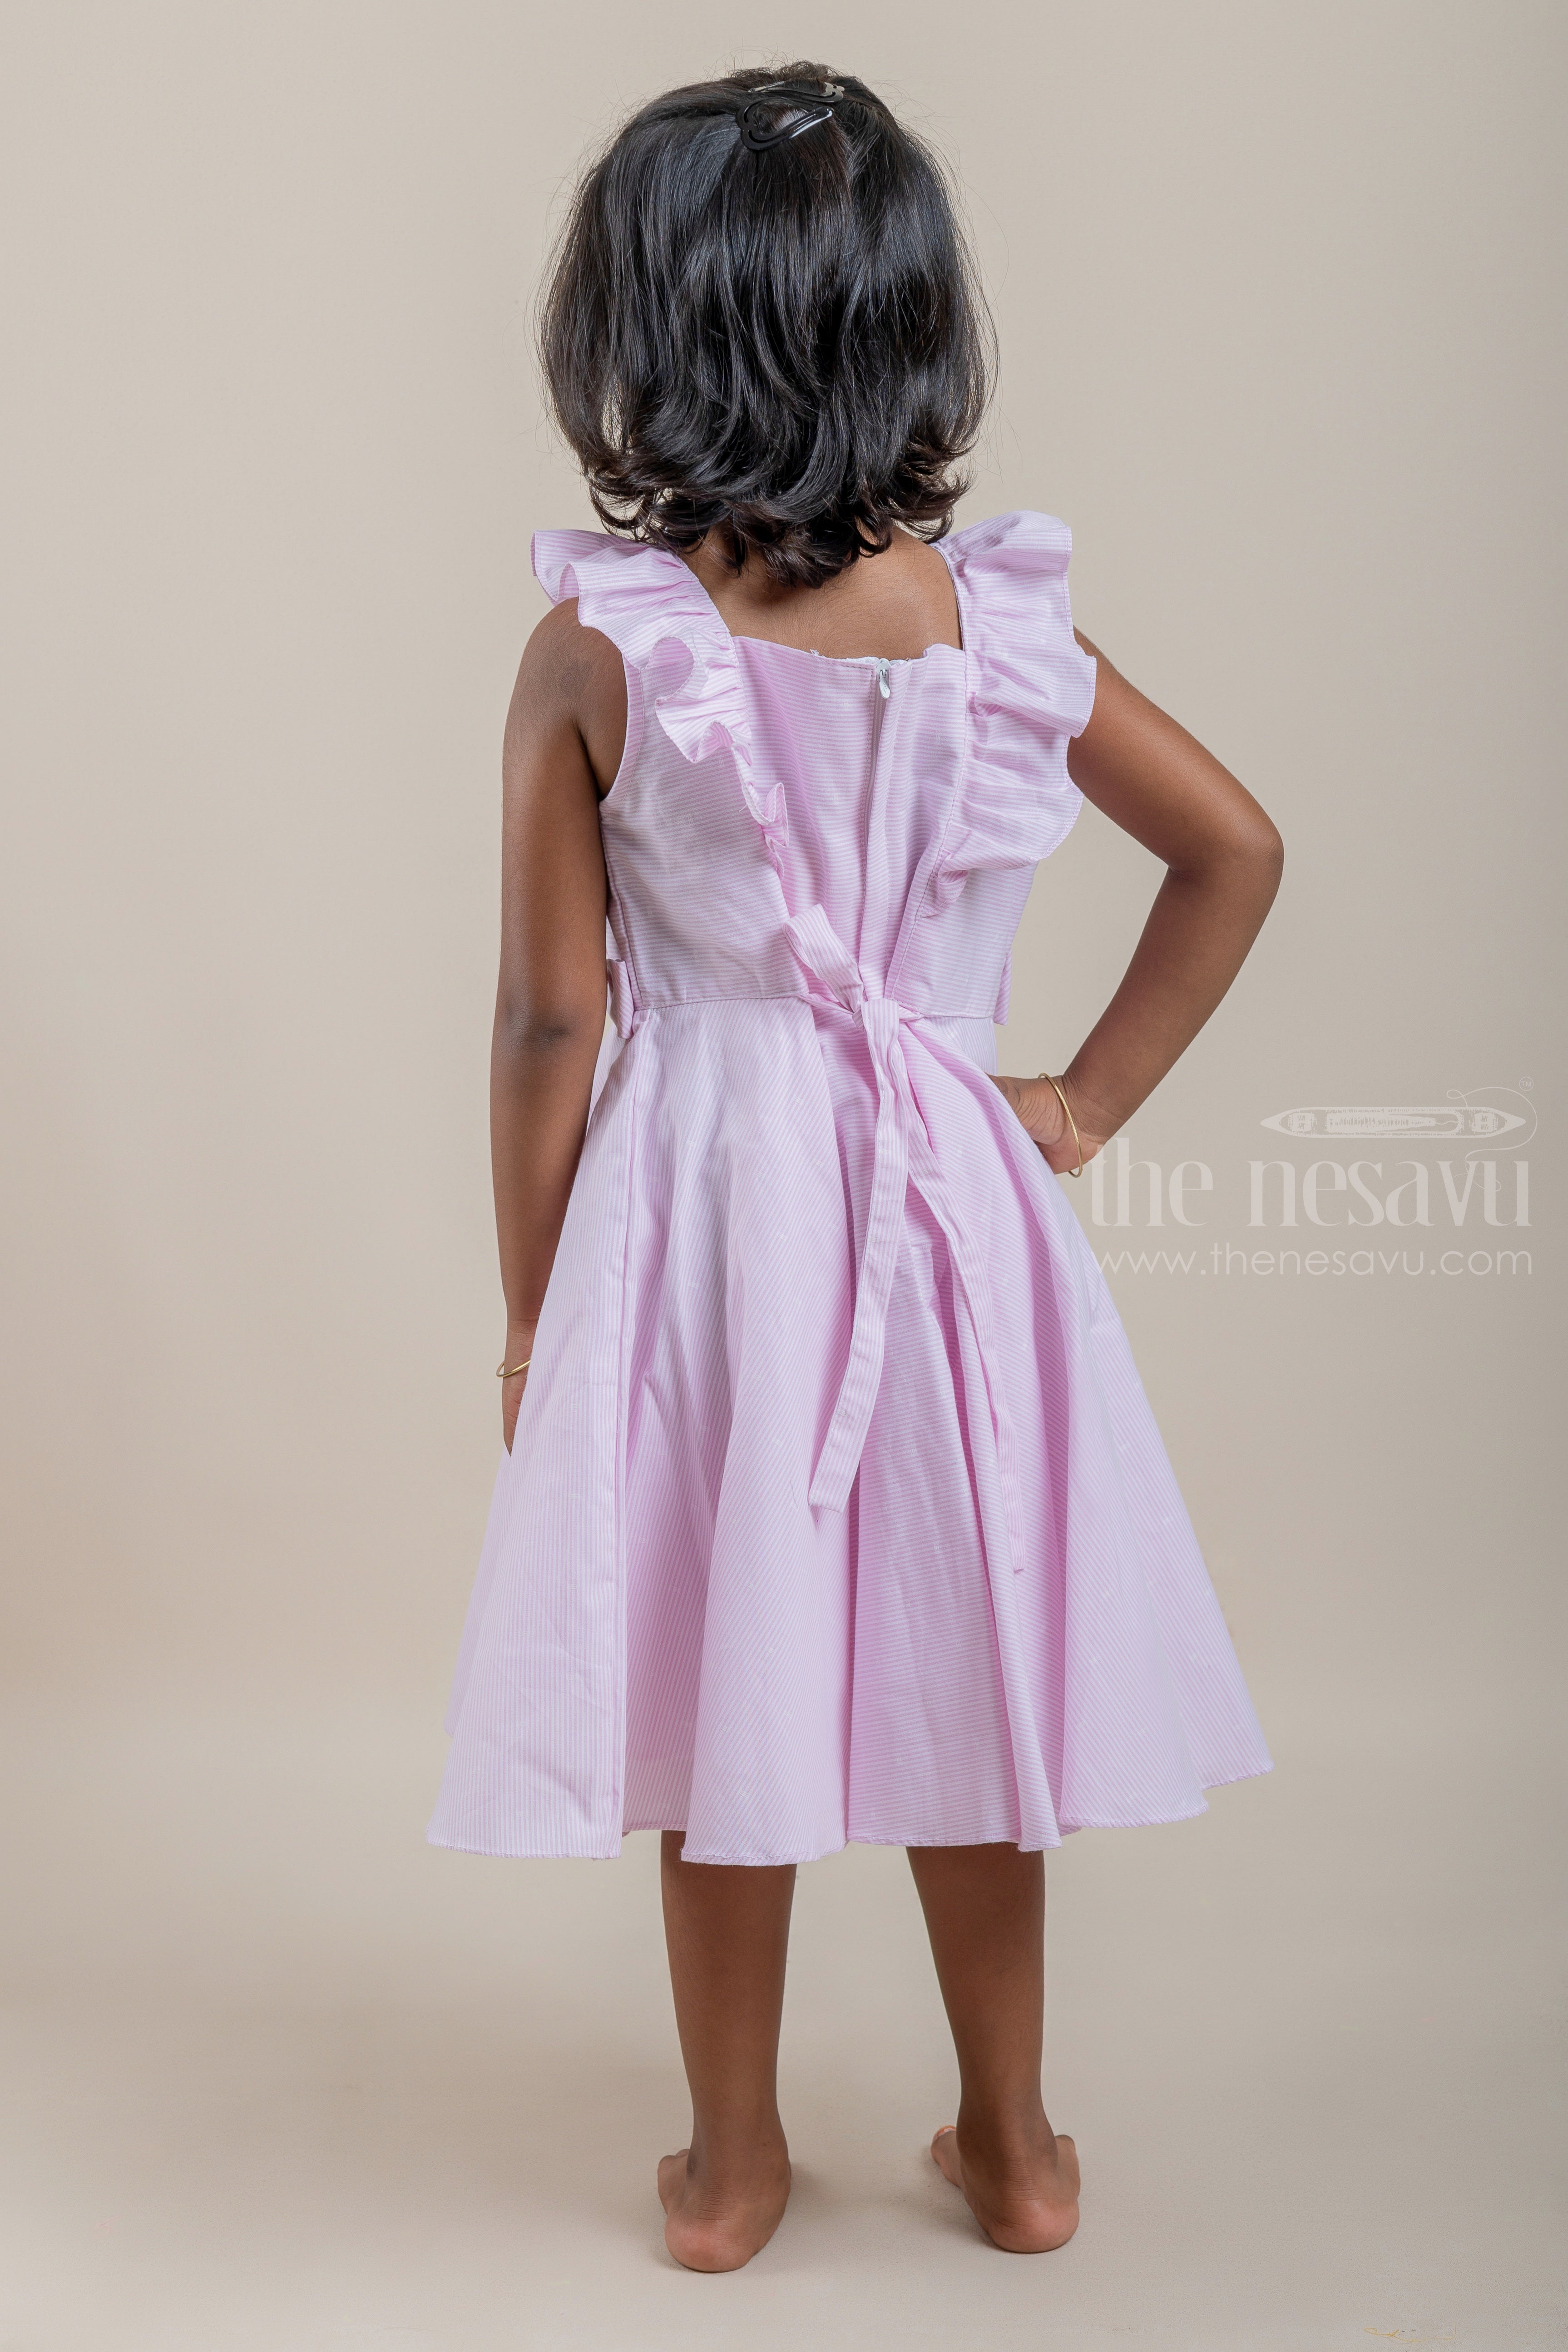 Casual Cotton Frock with Pink Pin Striped Design and Ruffled Yoke  Trendy  Girls Fashion  The Nesavu  The Nesavu